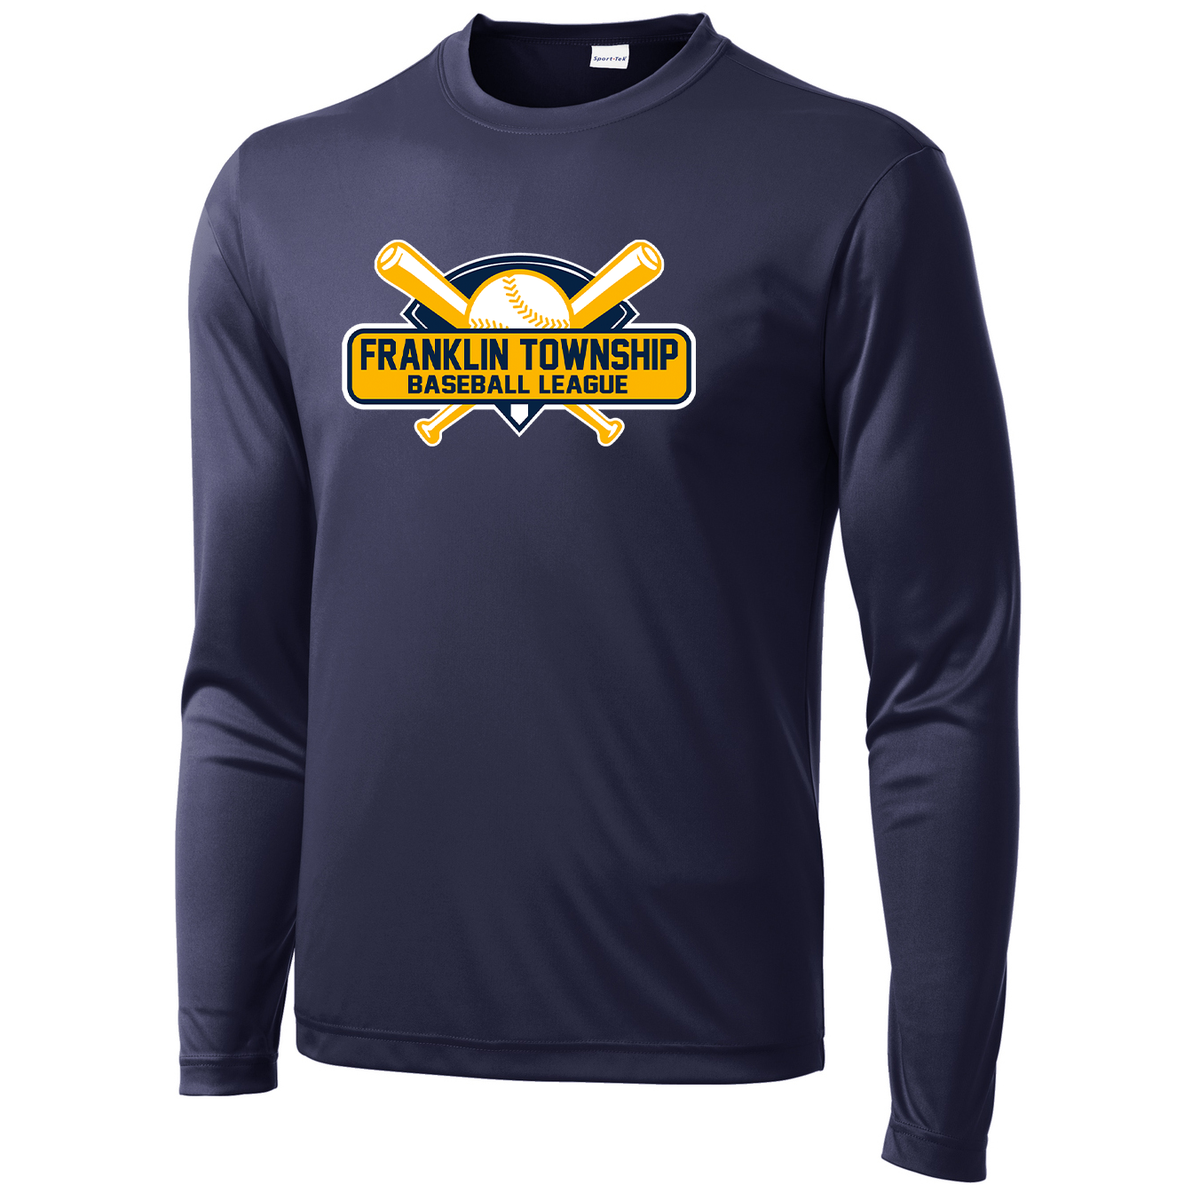 Franklin Township Baseball League Long Sleeve Performance Shirt